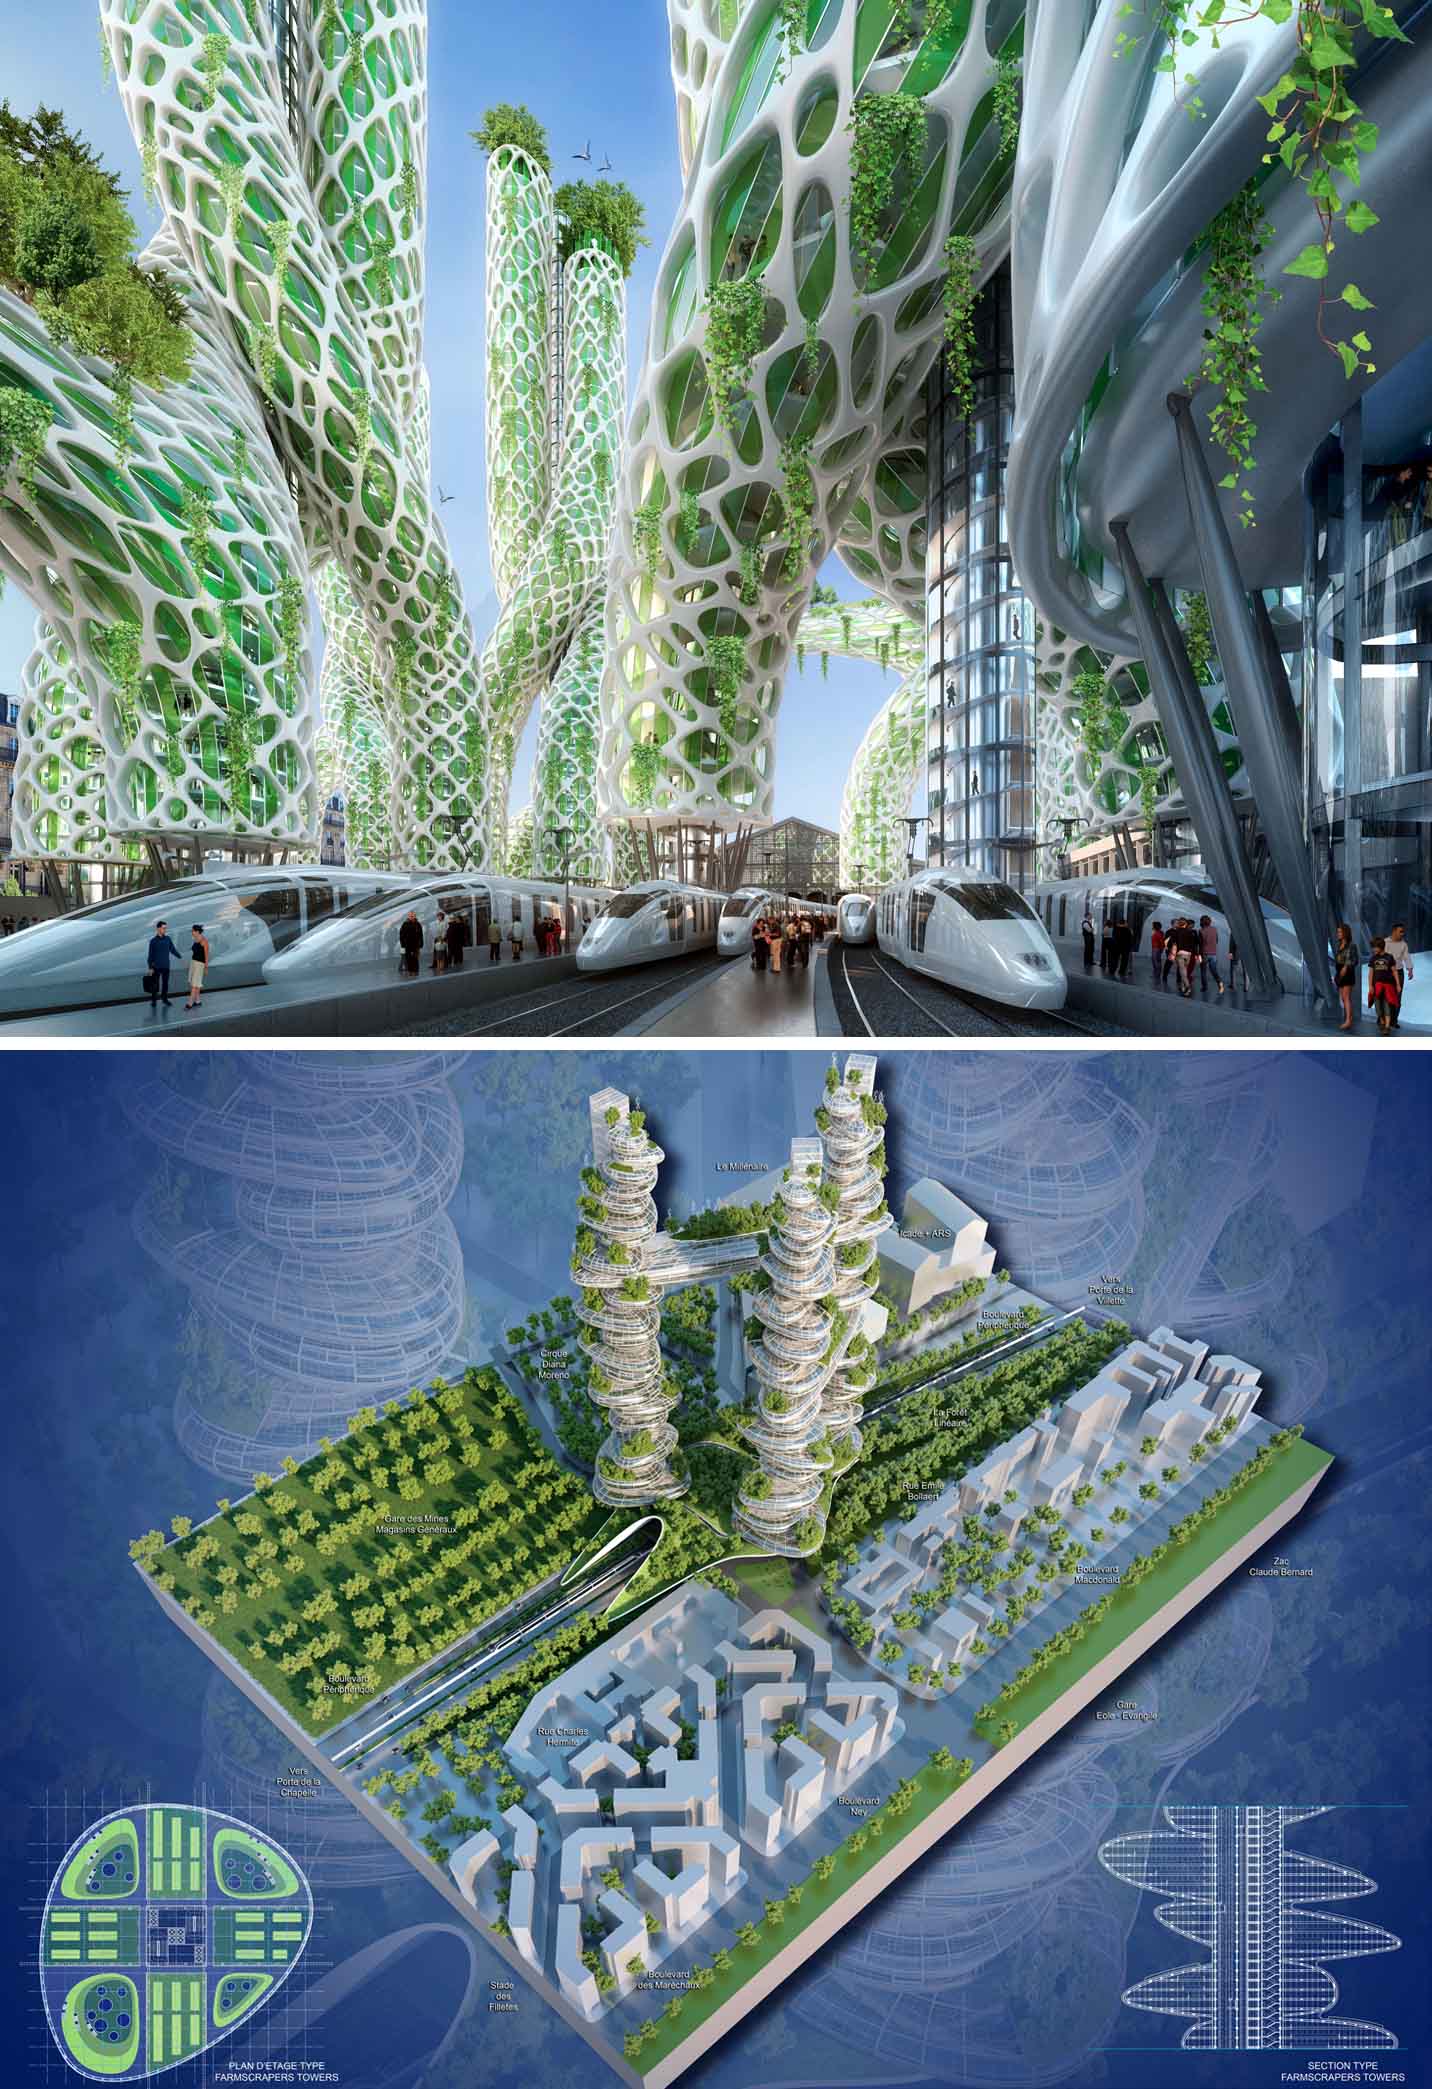 cities-future-paris-2050-details-mangrove-towers-farmscrapers